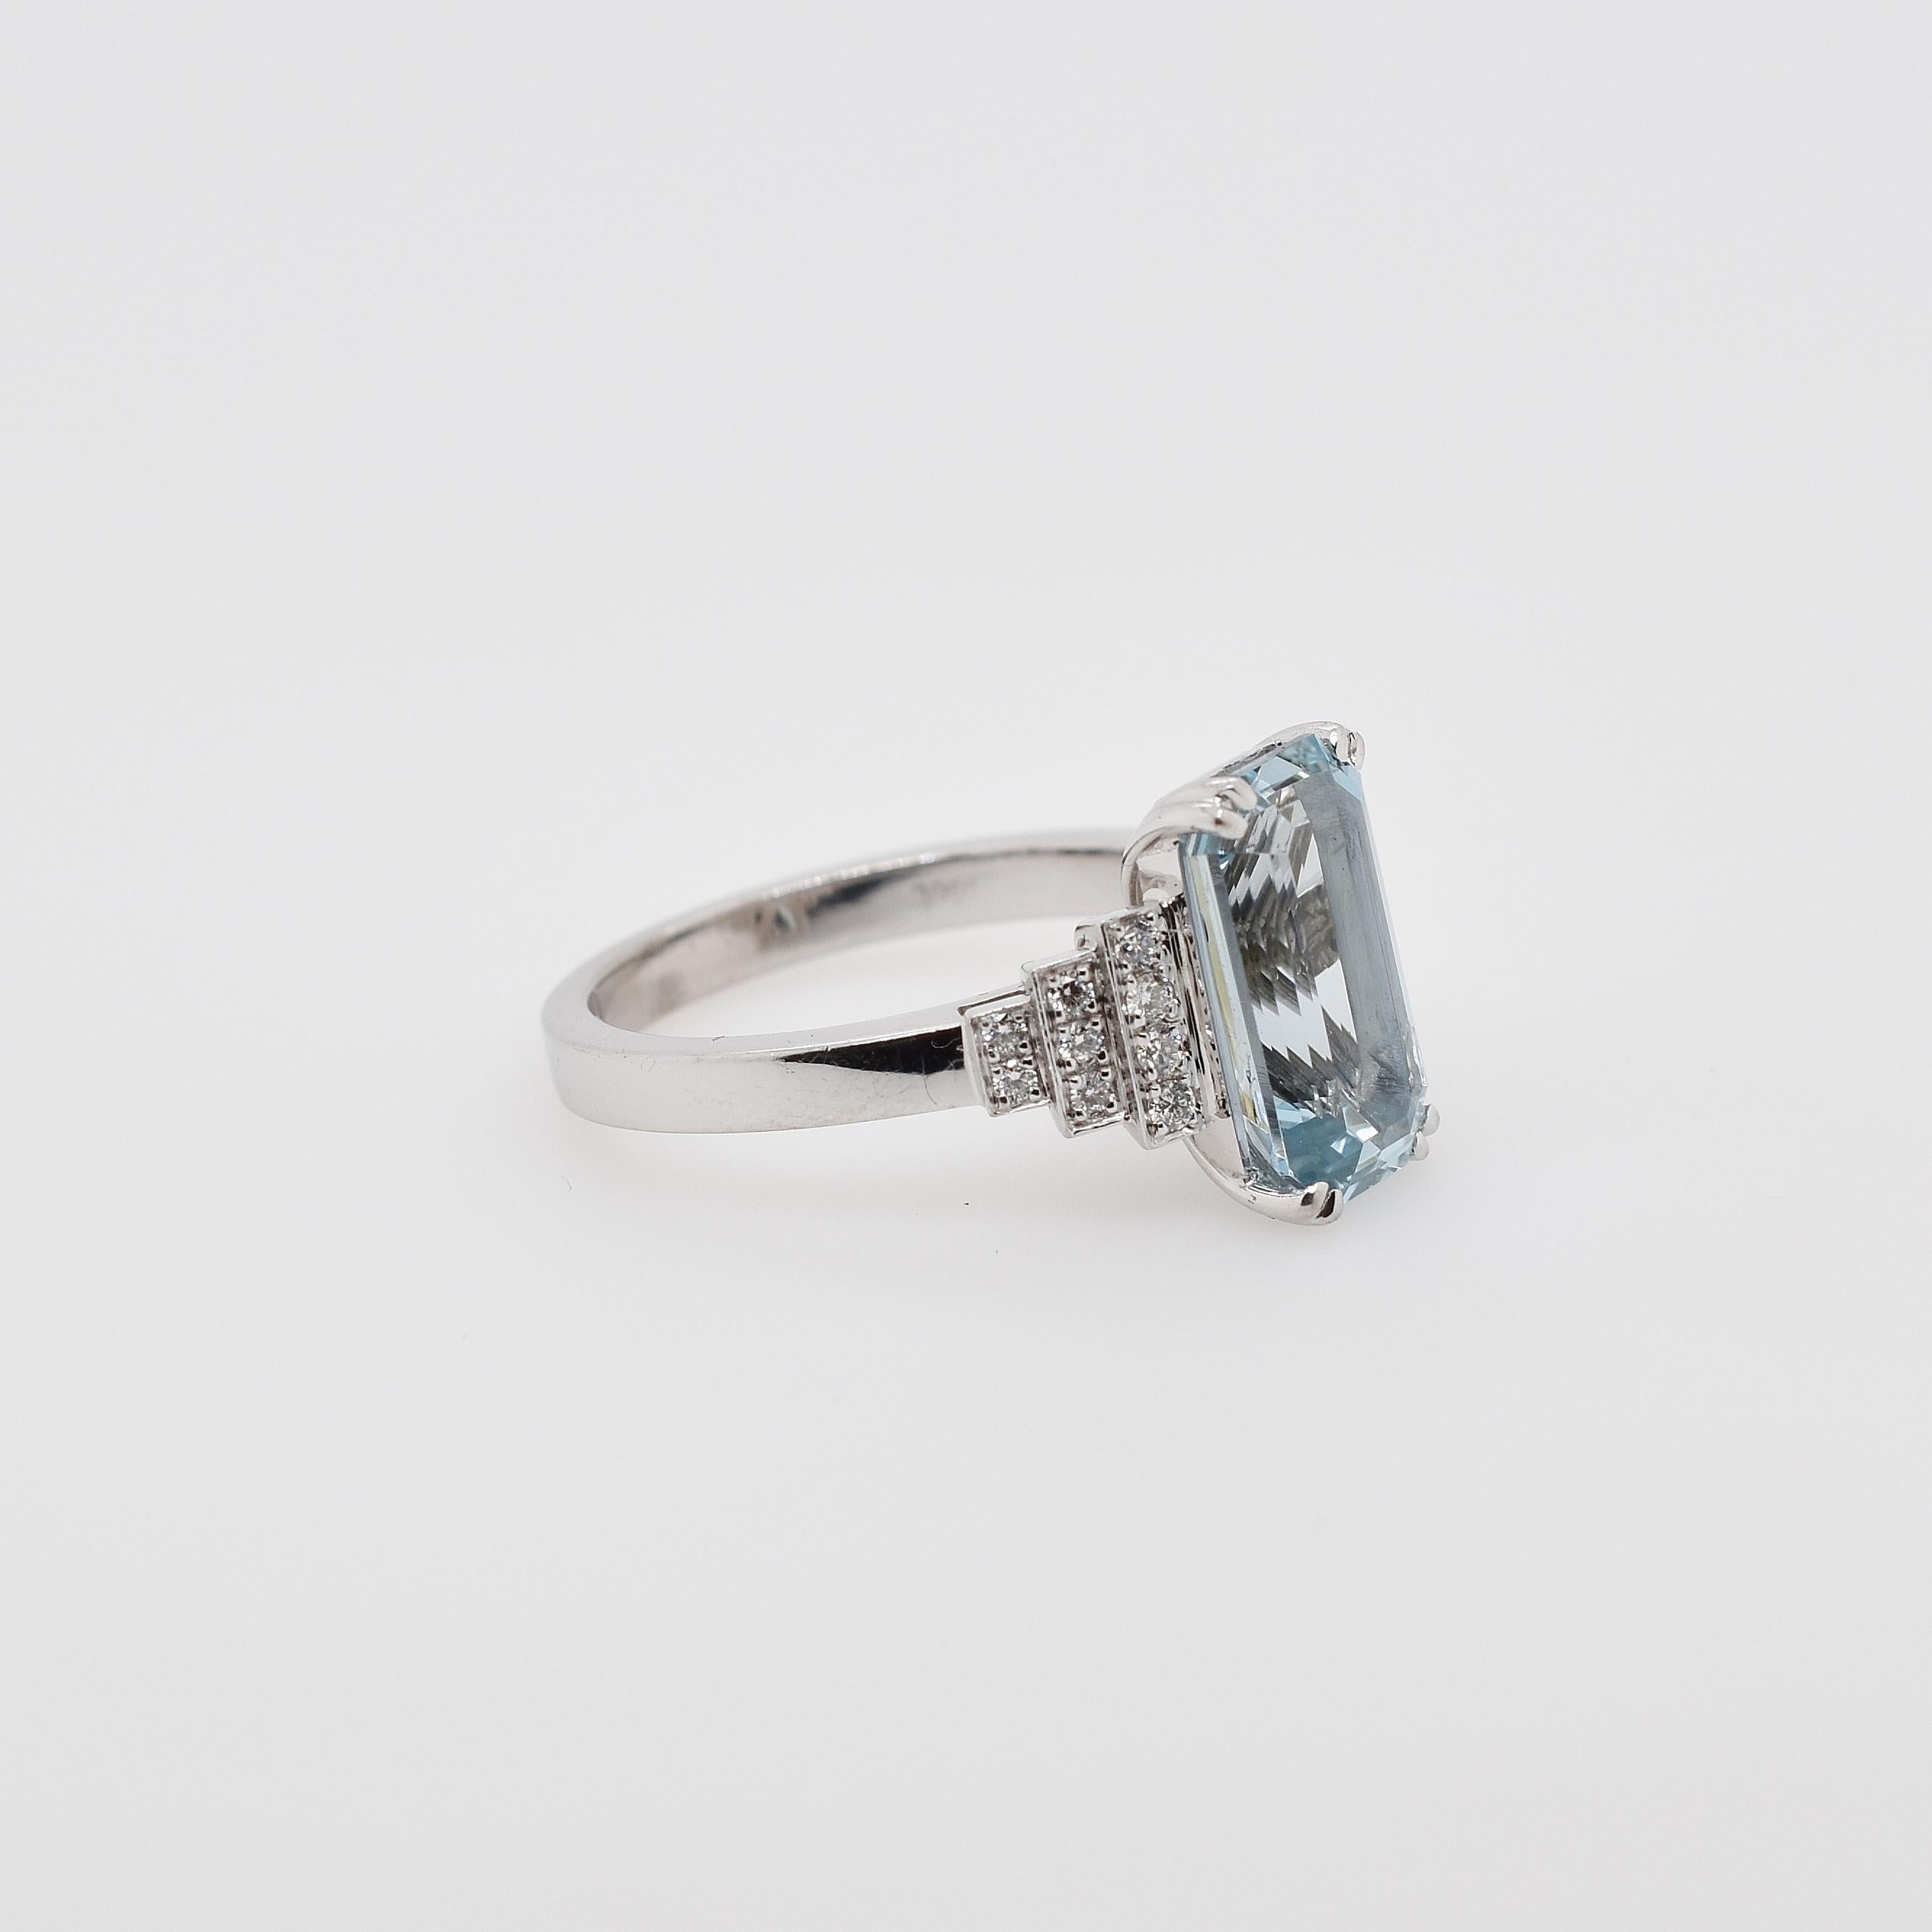 18 carat emerald cut diamond ring